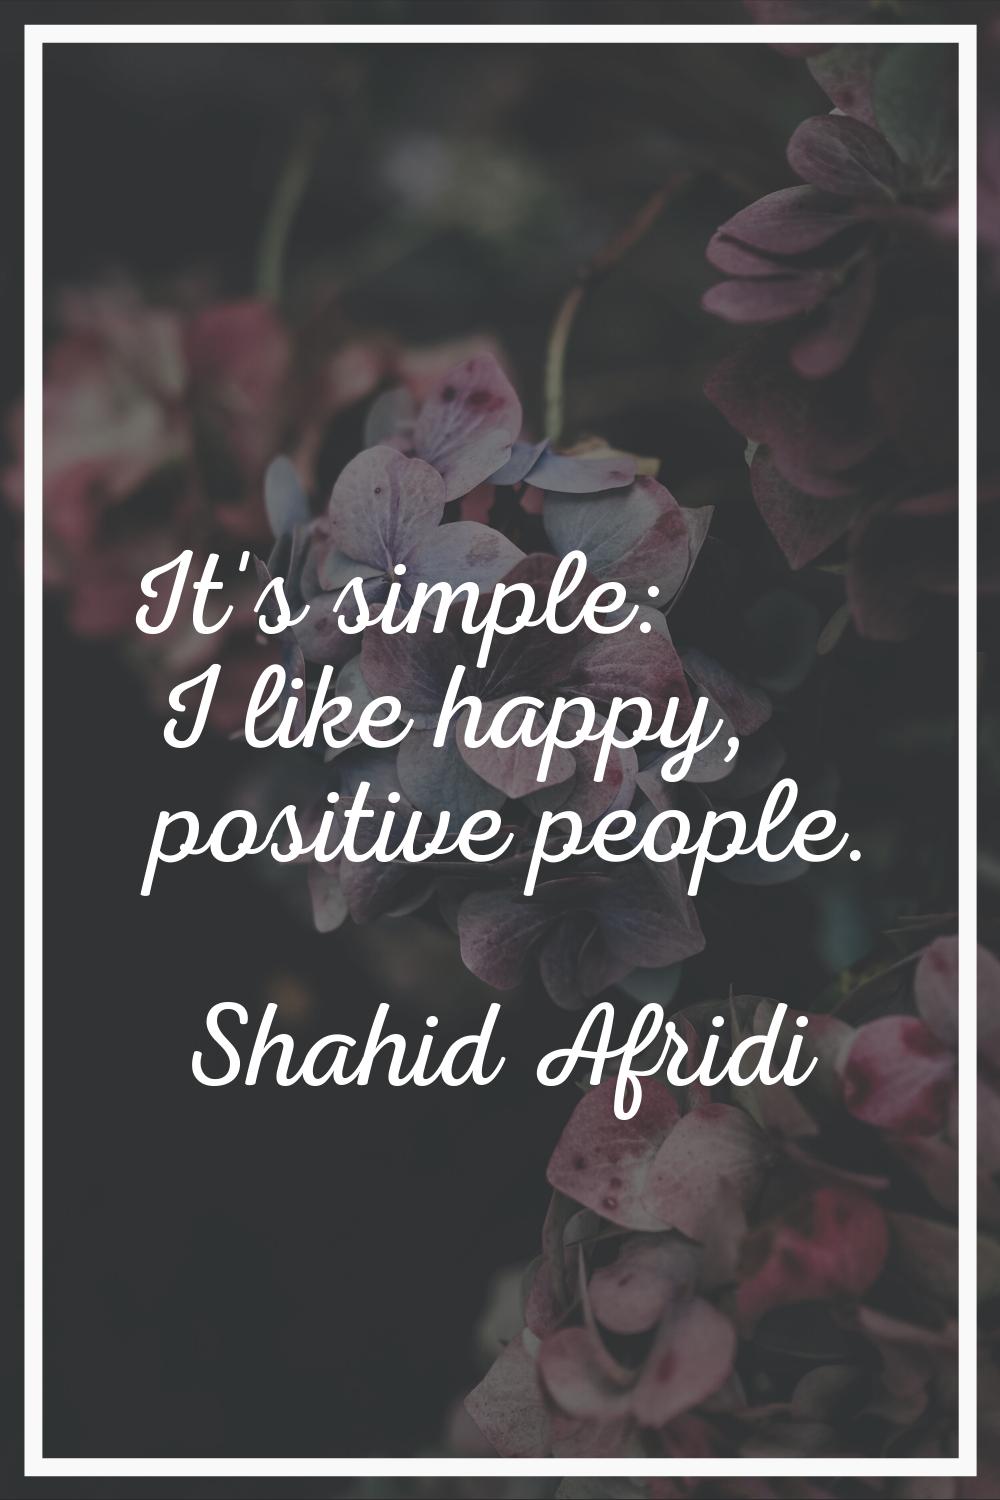 It's simple: I like happy, positive people.